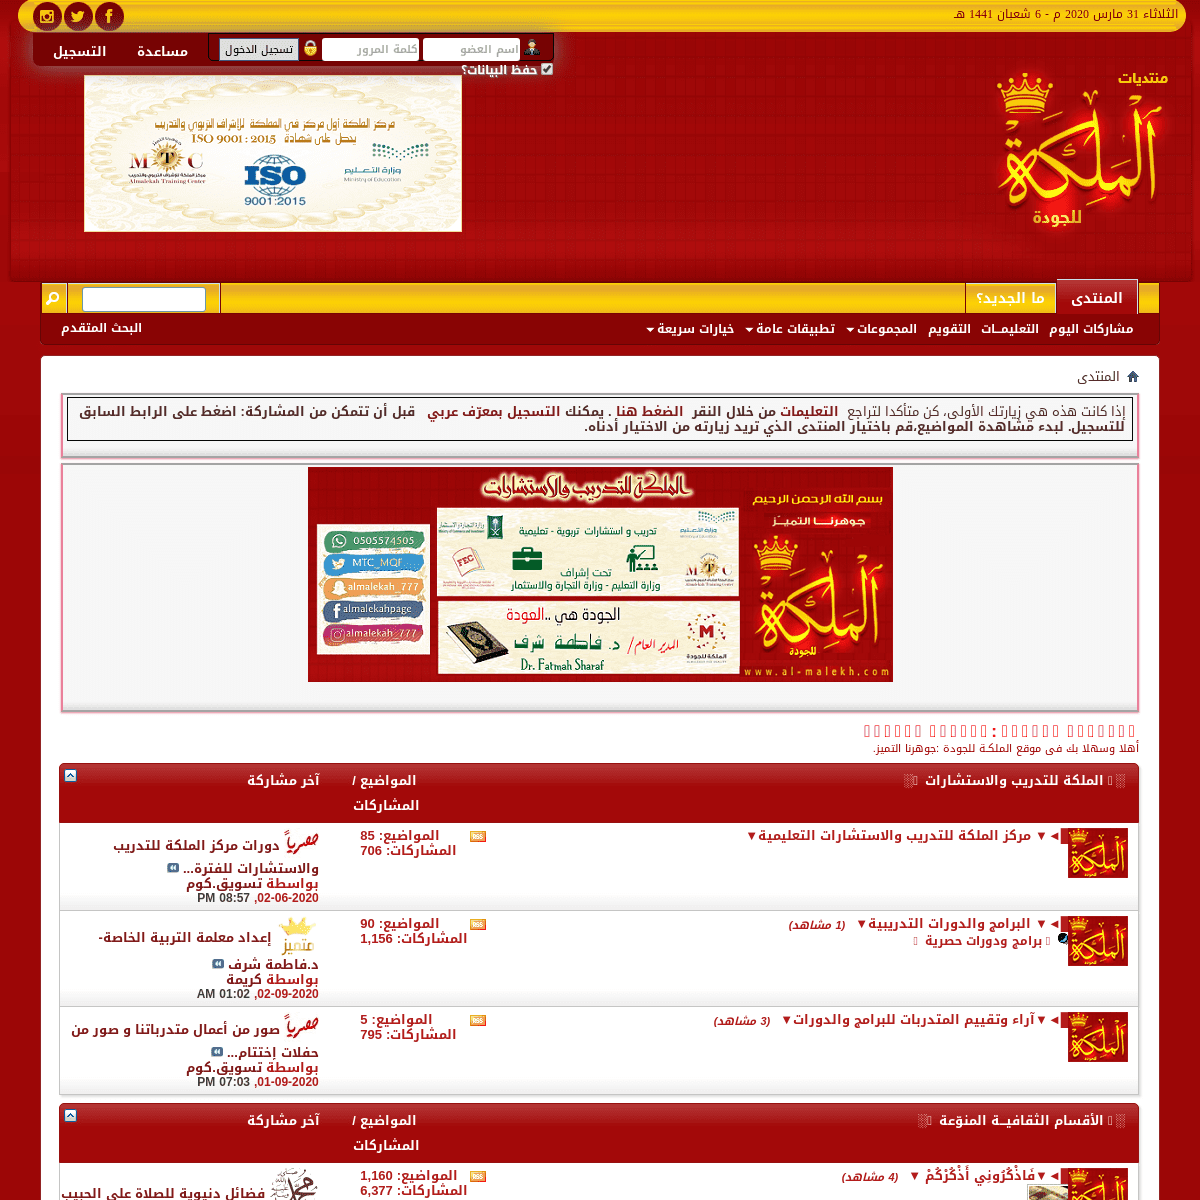 A complete backup of al-malekh.com